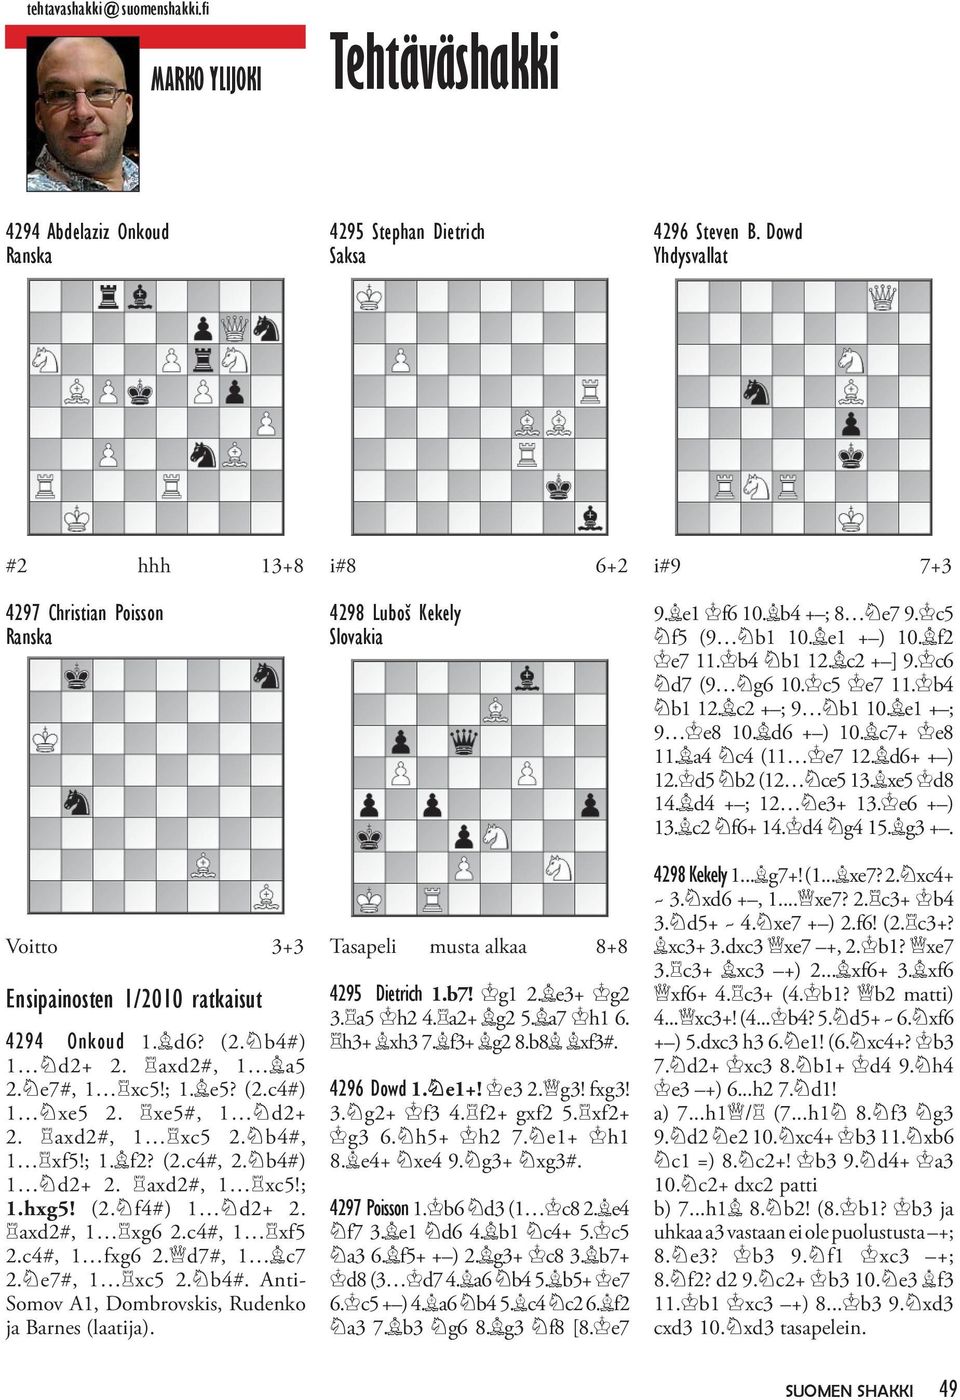 xe5#, 1 d2+ 2. axd2#, 1 xc5 2. b4#, 1 xf5!; 1. f2? (2.c4#, 2. b4#) 1 d2+ 2. axd2#, 1 xc5!; 1.hxg5! (2. f4#) 1 d2+ 2. axd2#, 1 xg6 2.c4#, 1 xf5 2.c4#, 1 fxg6 2. d7#, 1 c7 2. e7#, 1 xc5 2. b4#. Anti- Somov A1, Dombrovskis, Rudenko ja Barnes (laatija).